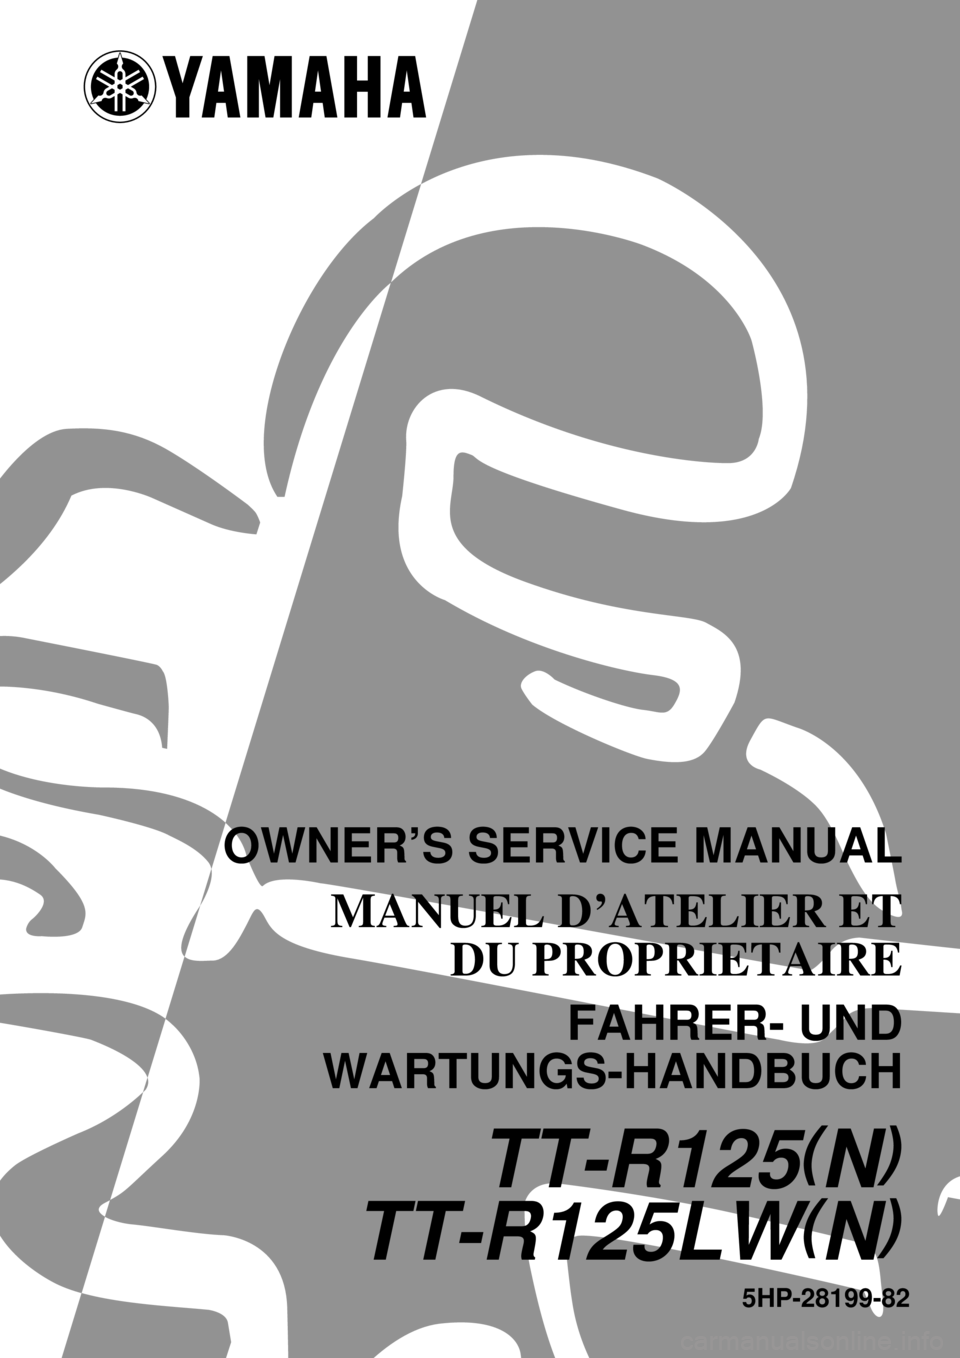 YAMAHA TTR125 2001  Owners Manual      
 
 
 
5HP-28199-82
TT-R125(N)
TT-R125LW(N)
OWNER’S SERVICE MANUAL
MANUEL D’ATELIER ET
DU PROPRIETAIRE
FAHRER- UND
WARTUNGS-HANDBUCH 